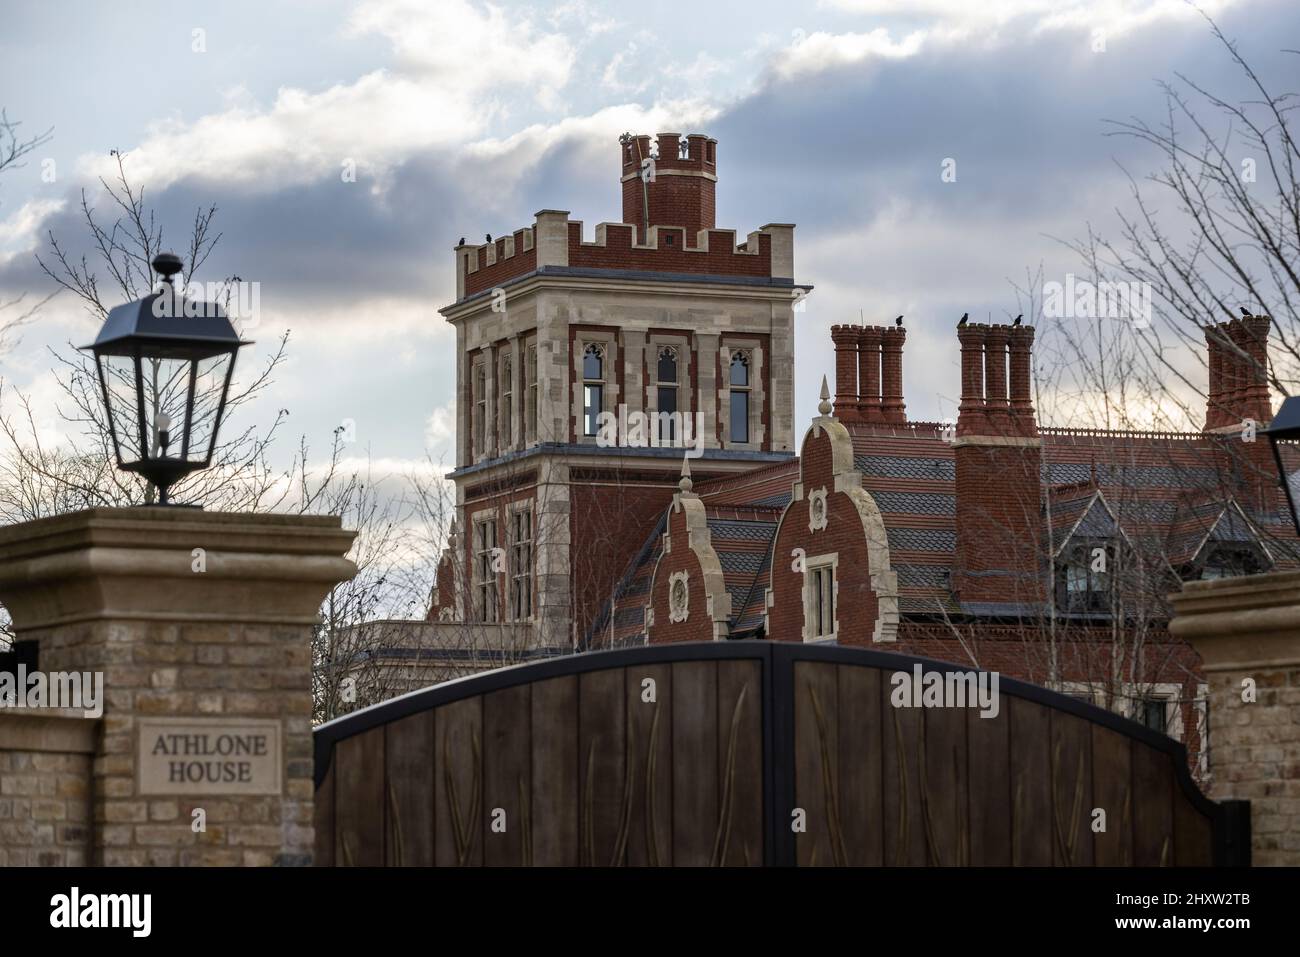 Hogar del oligarca ruso Mikhail Fridman, 'Athlone House' en Highgate, North London, Inglaterra, Reino Unido Foto de stock